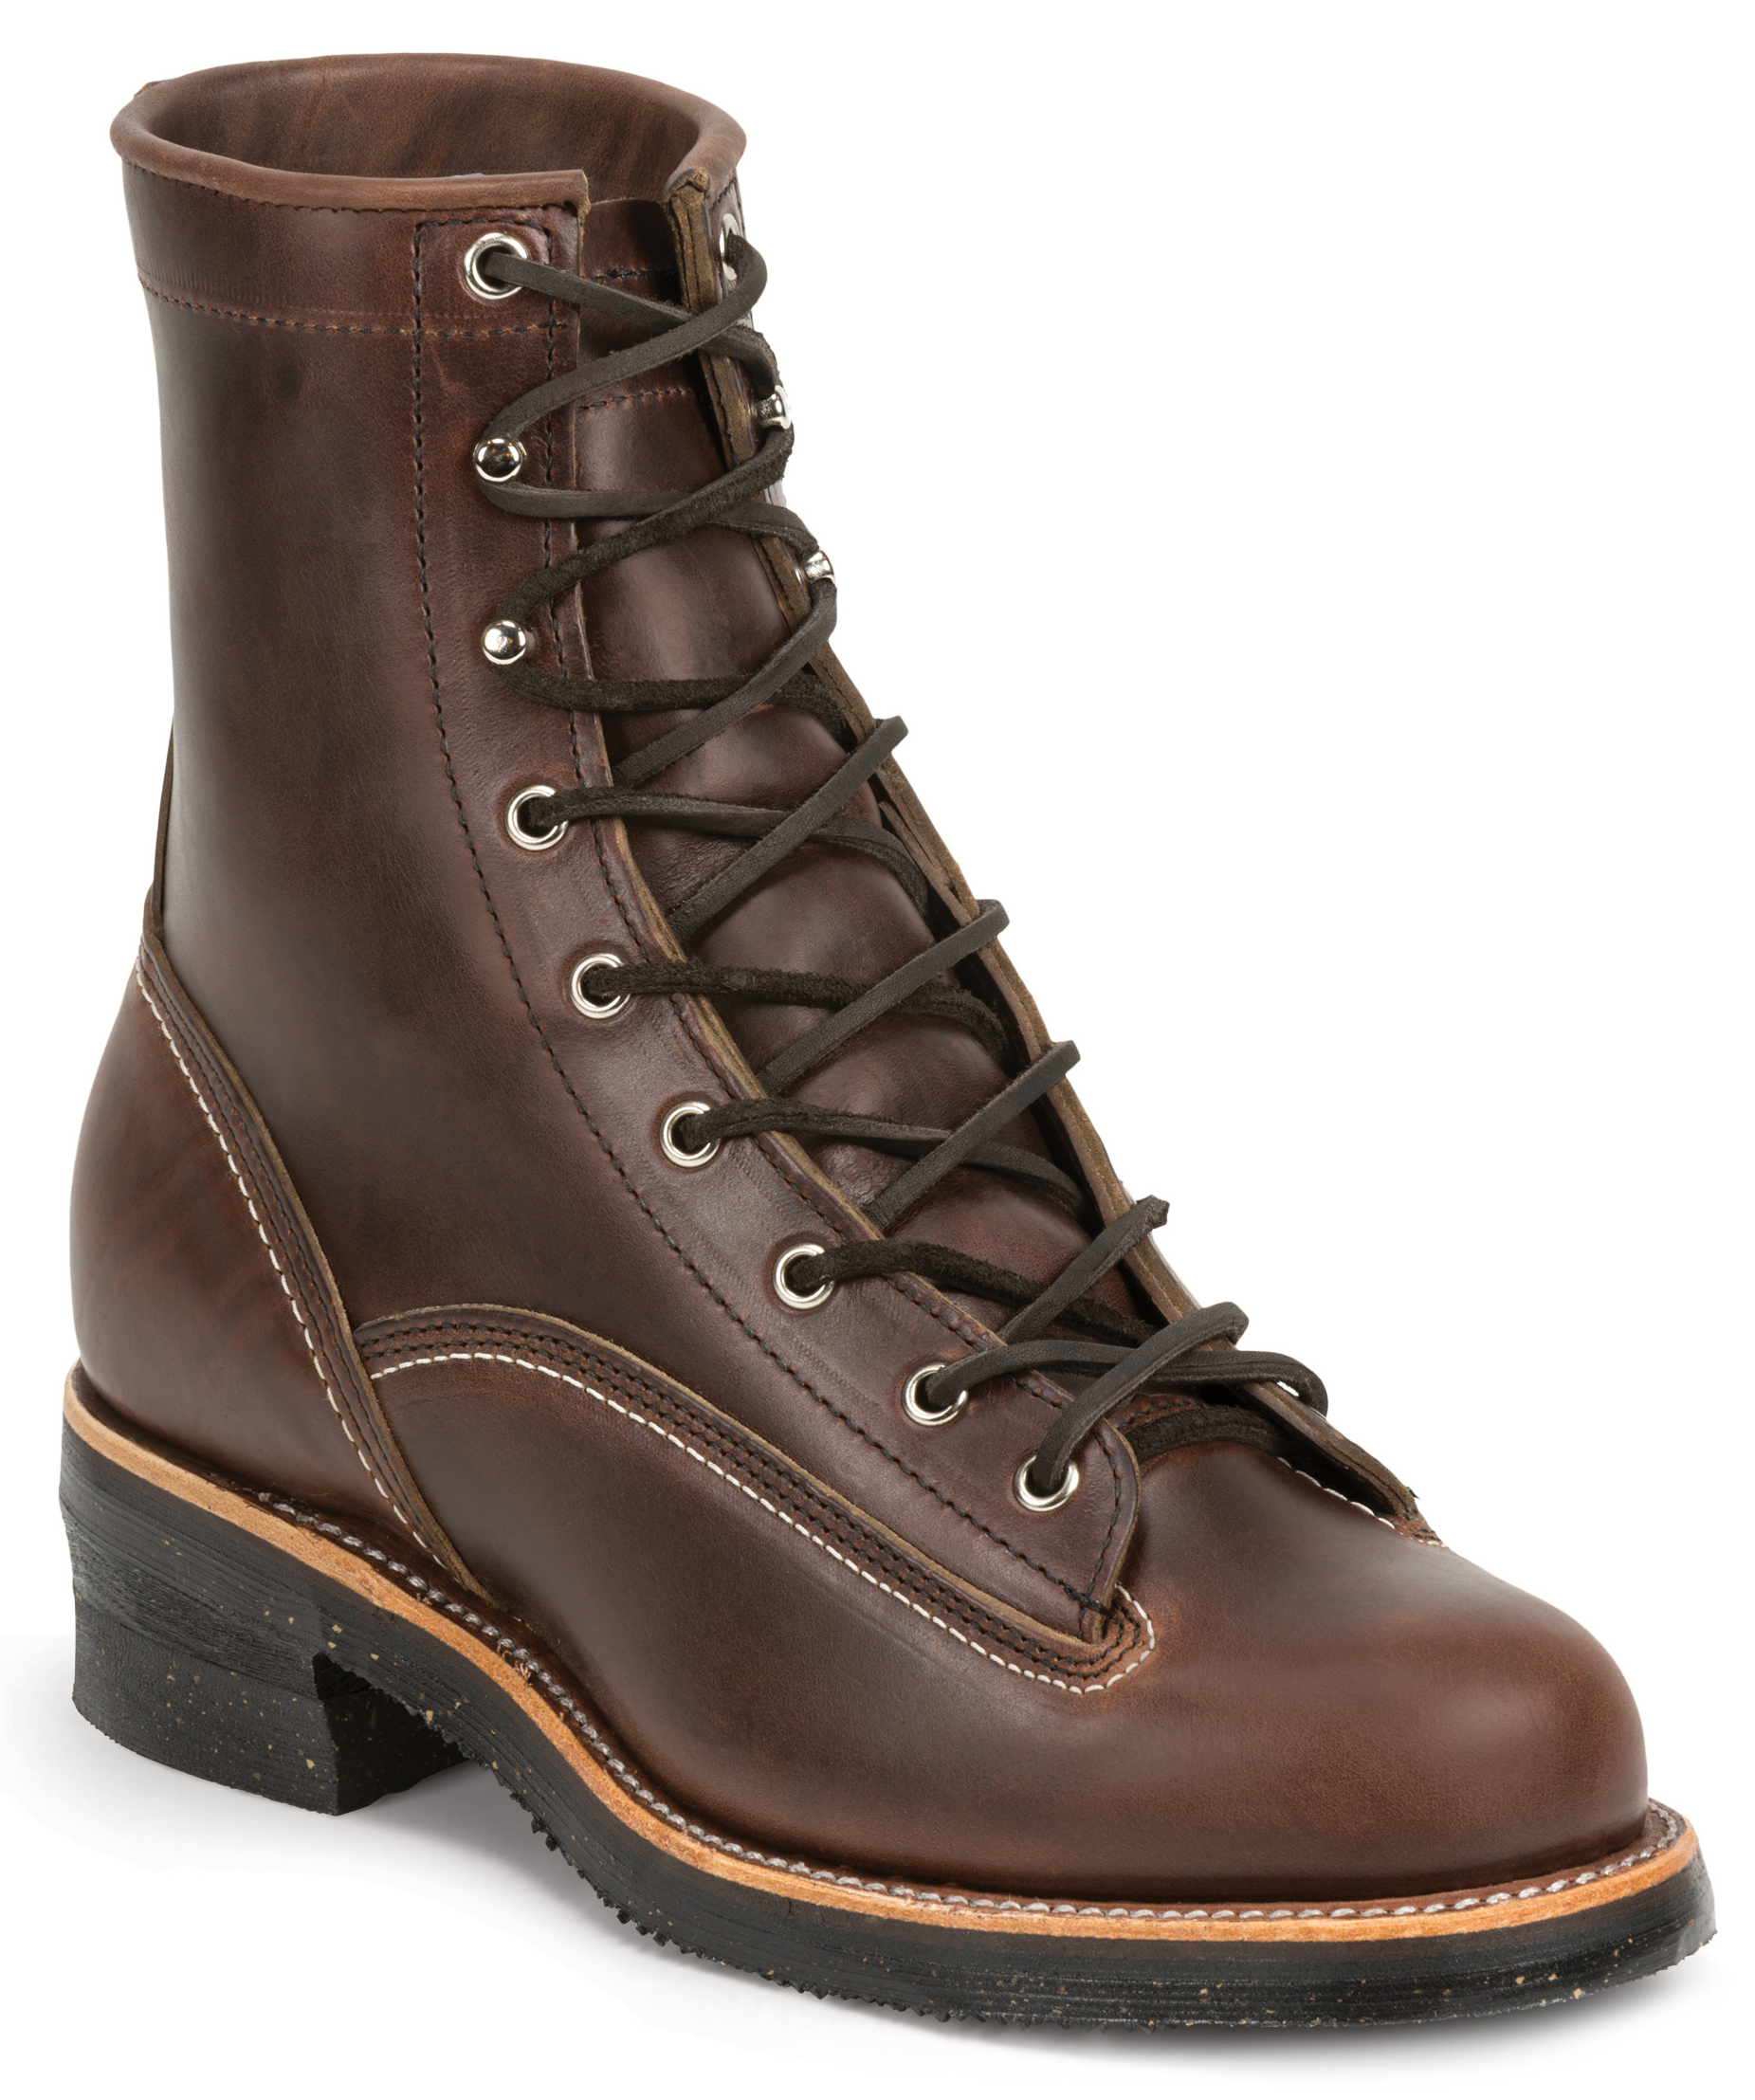 Chippewa Men's 1935 Original Chocolate Mountaineer Logger Boots - Round ...